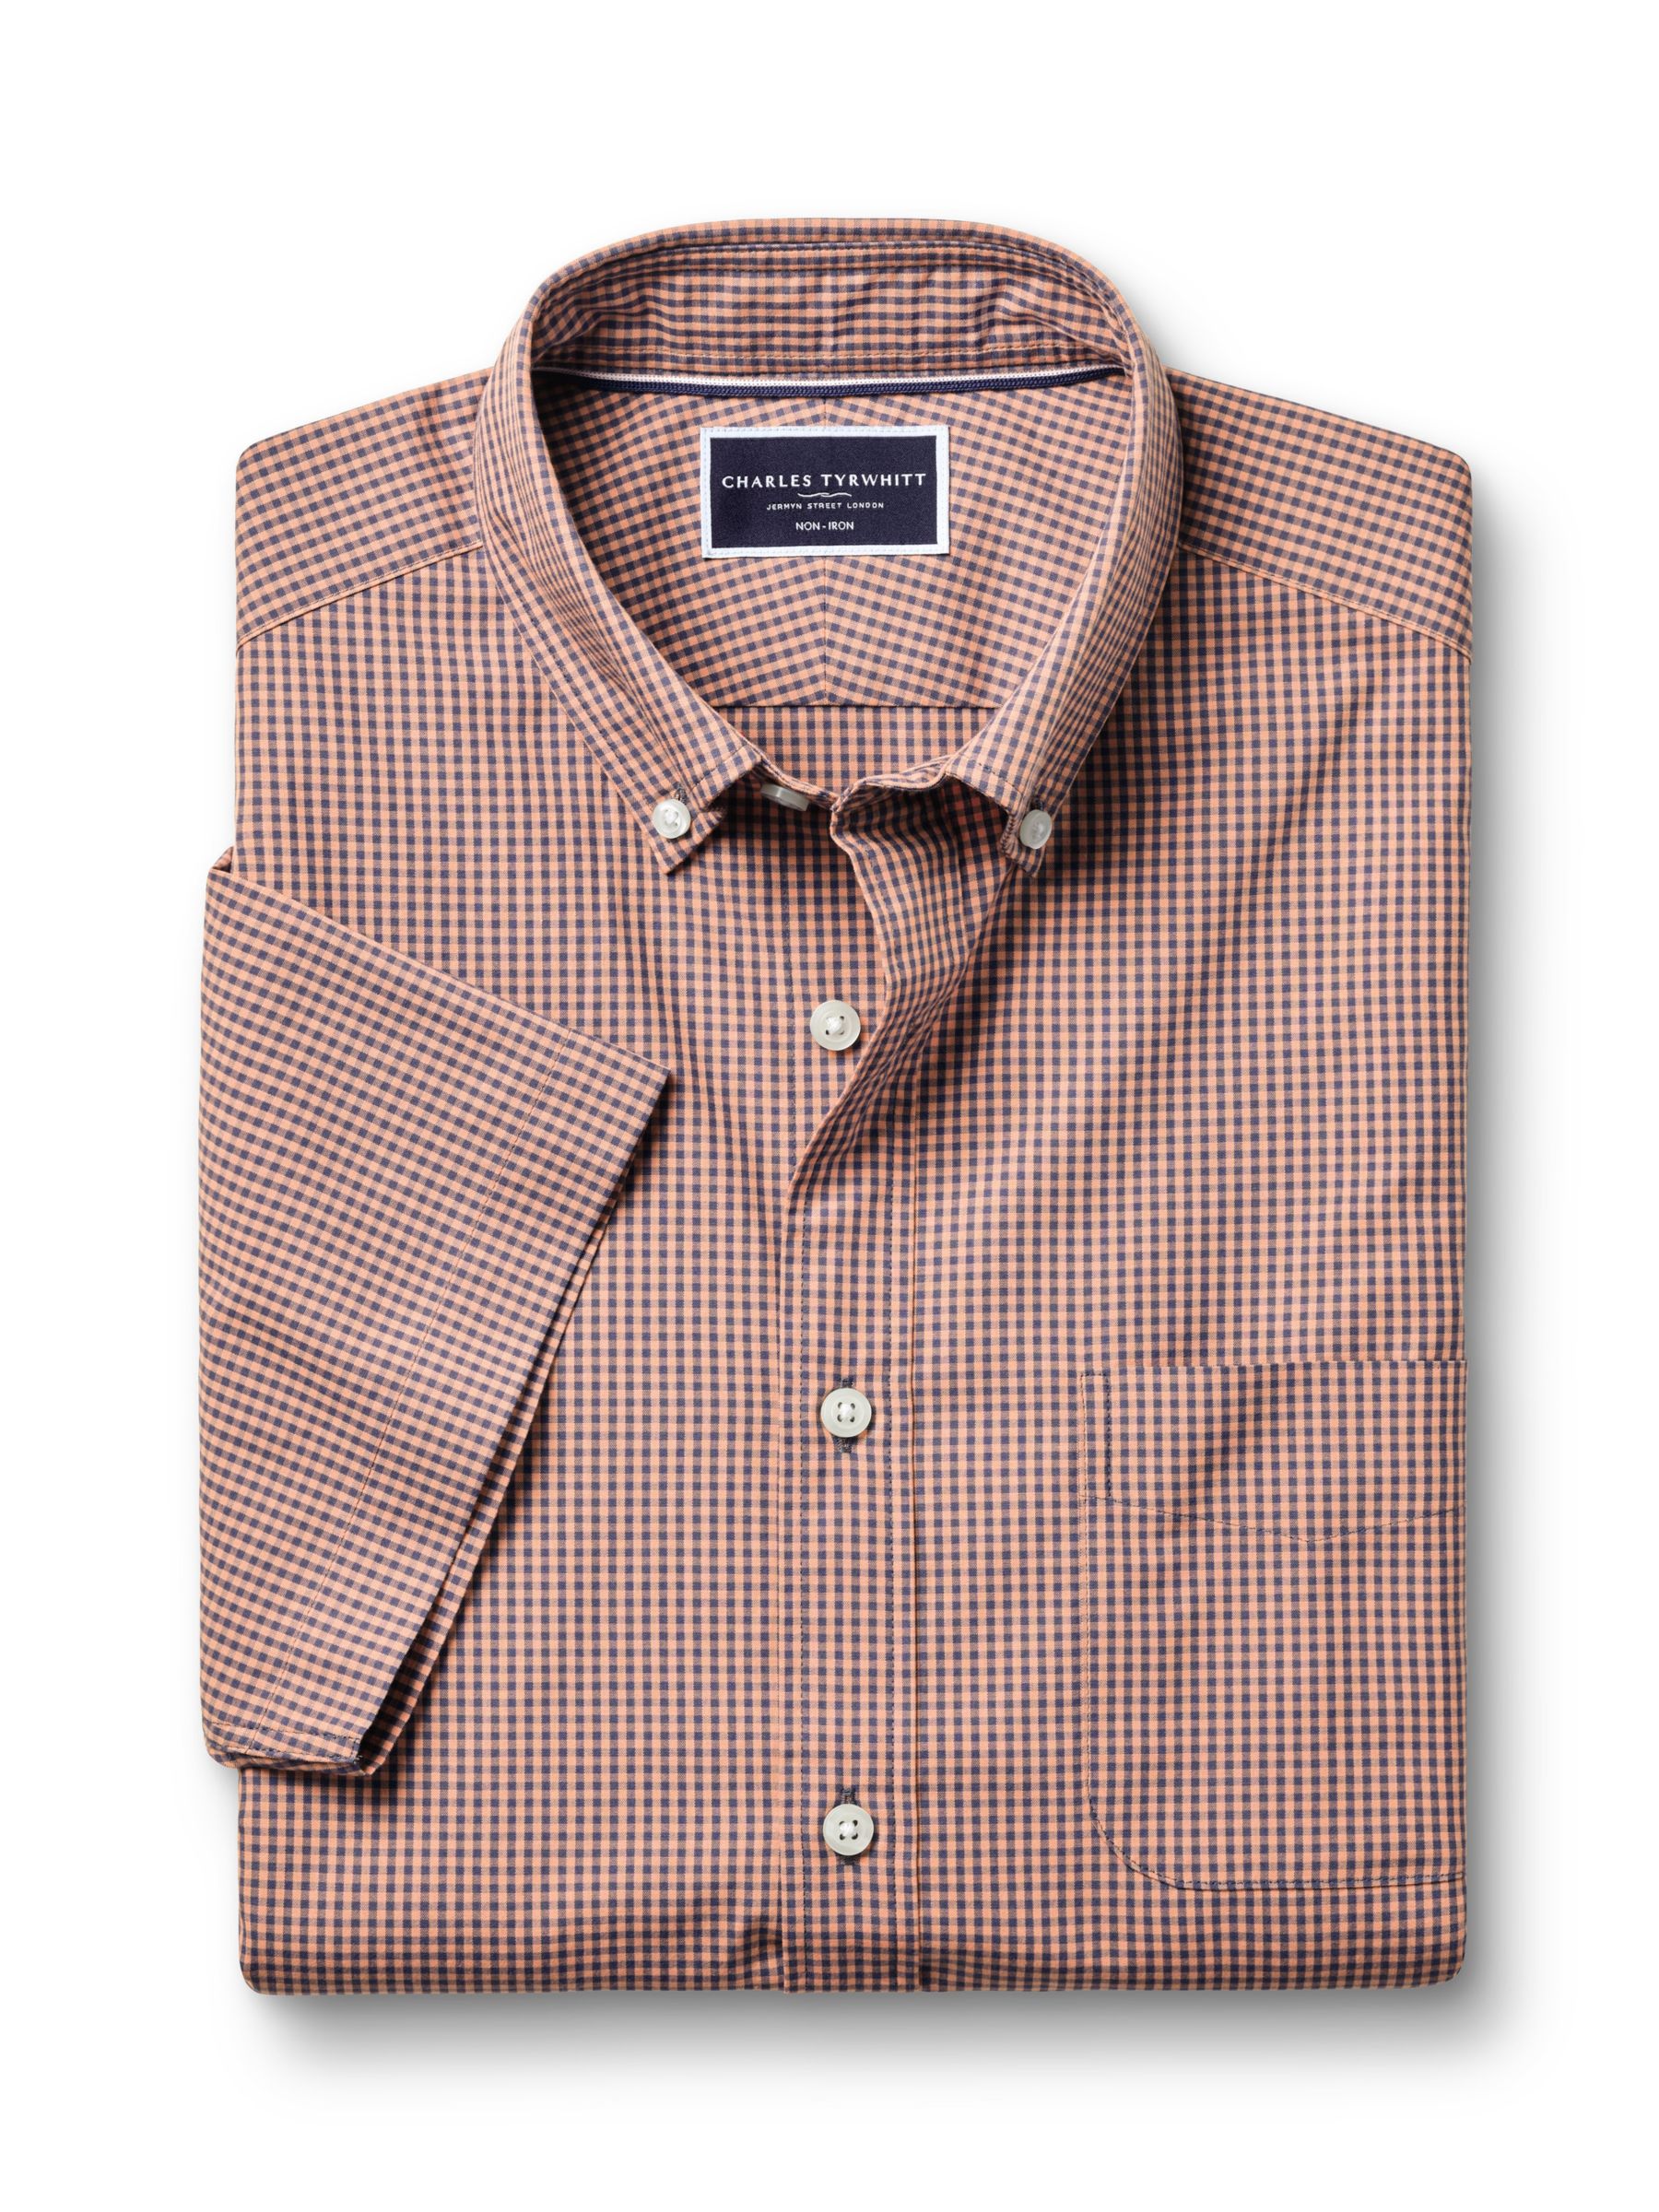 Charles Tyrwhitt Non-Iron Stretch Short Sleeve Shirt, Light Coral Pink, XL